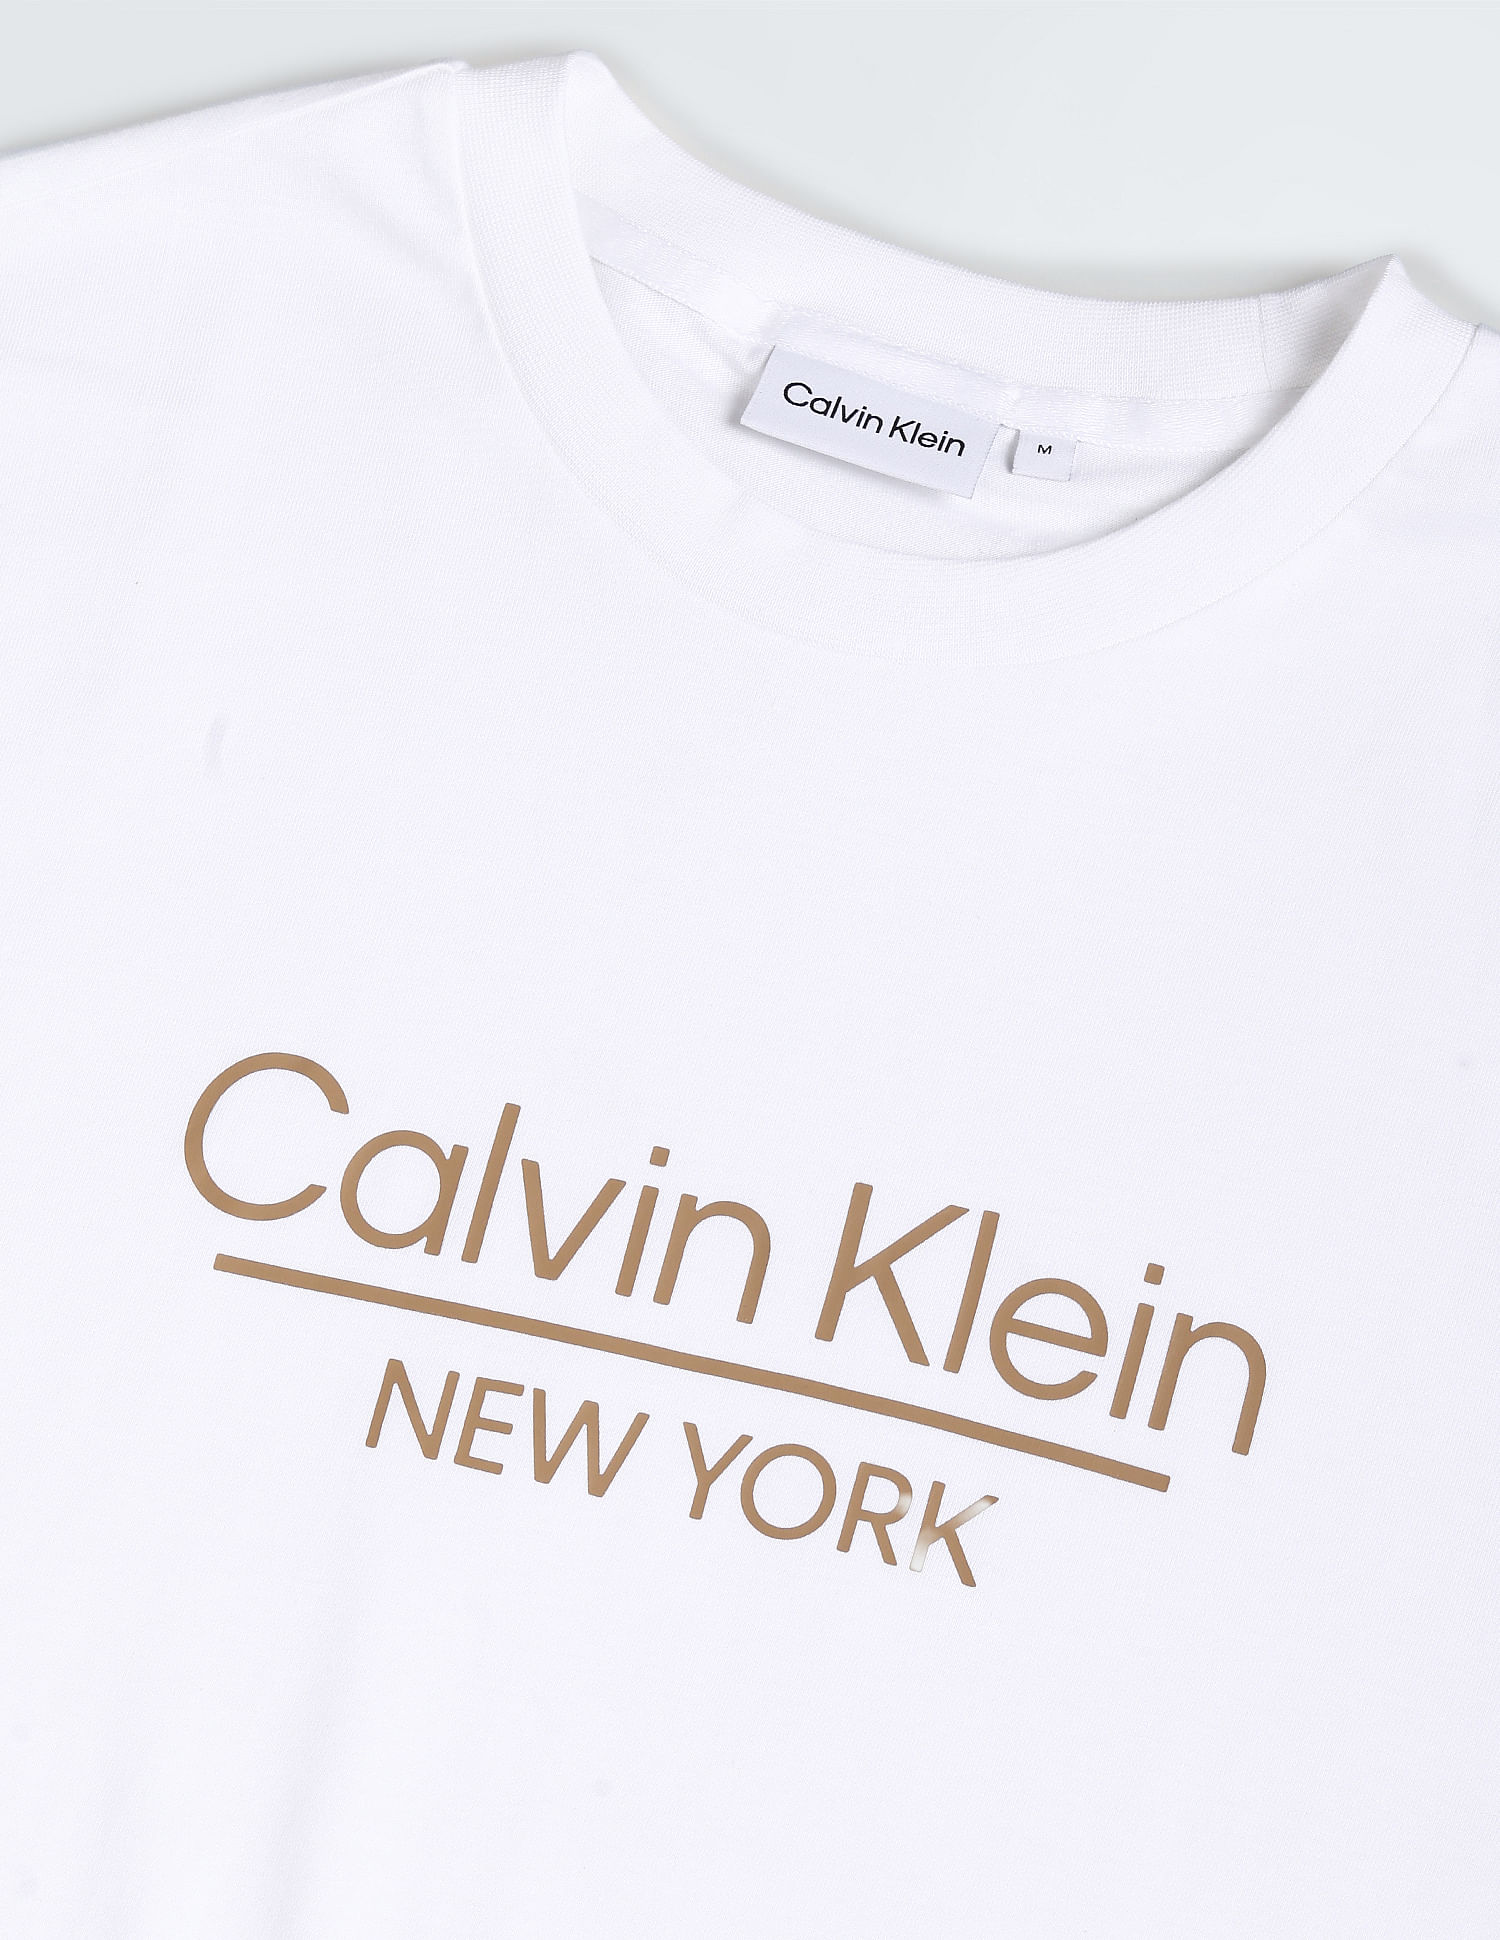 Buy Calvin Klein Recycled Cotton New York Logo T-Shirt - NNNOW.com